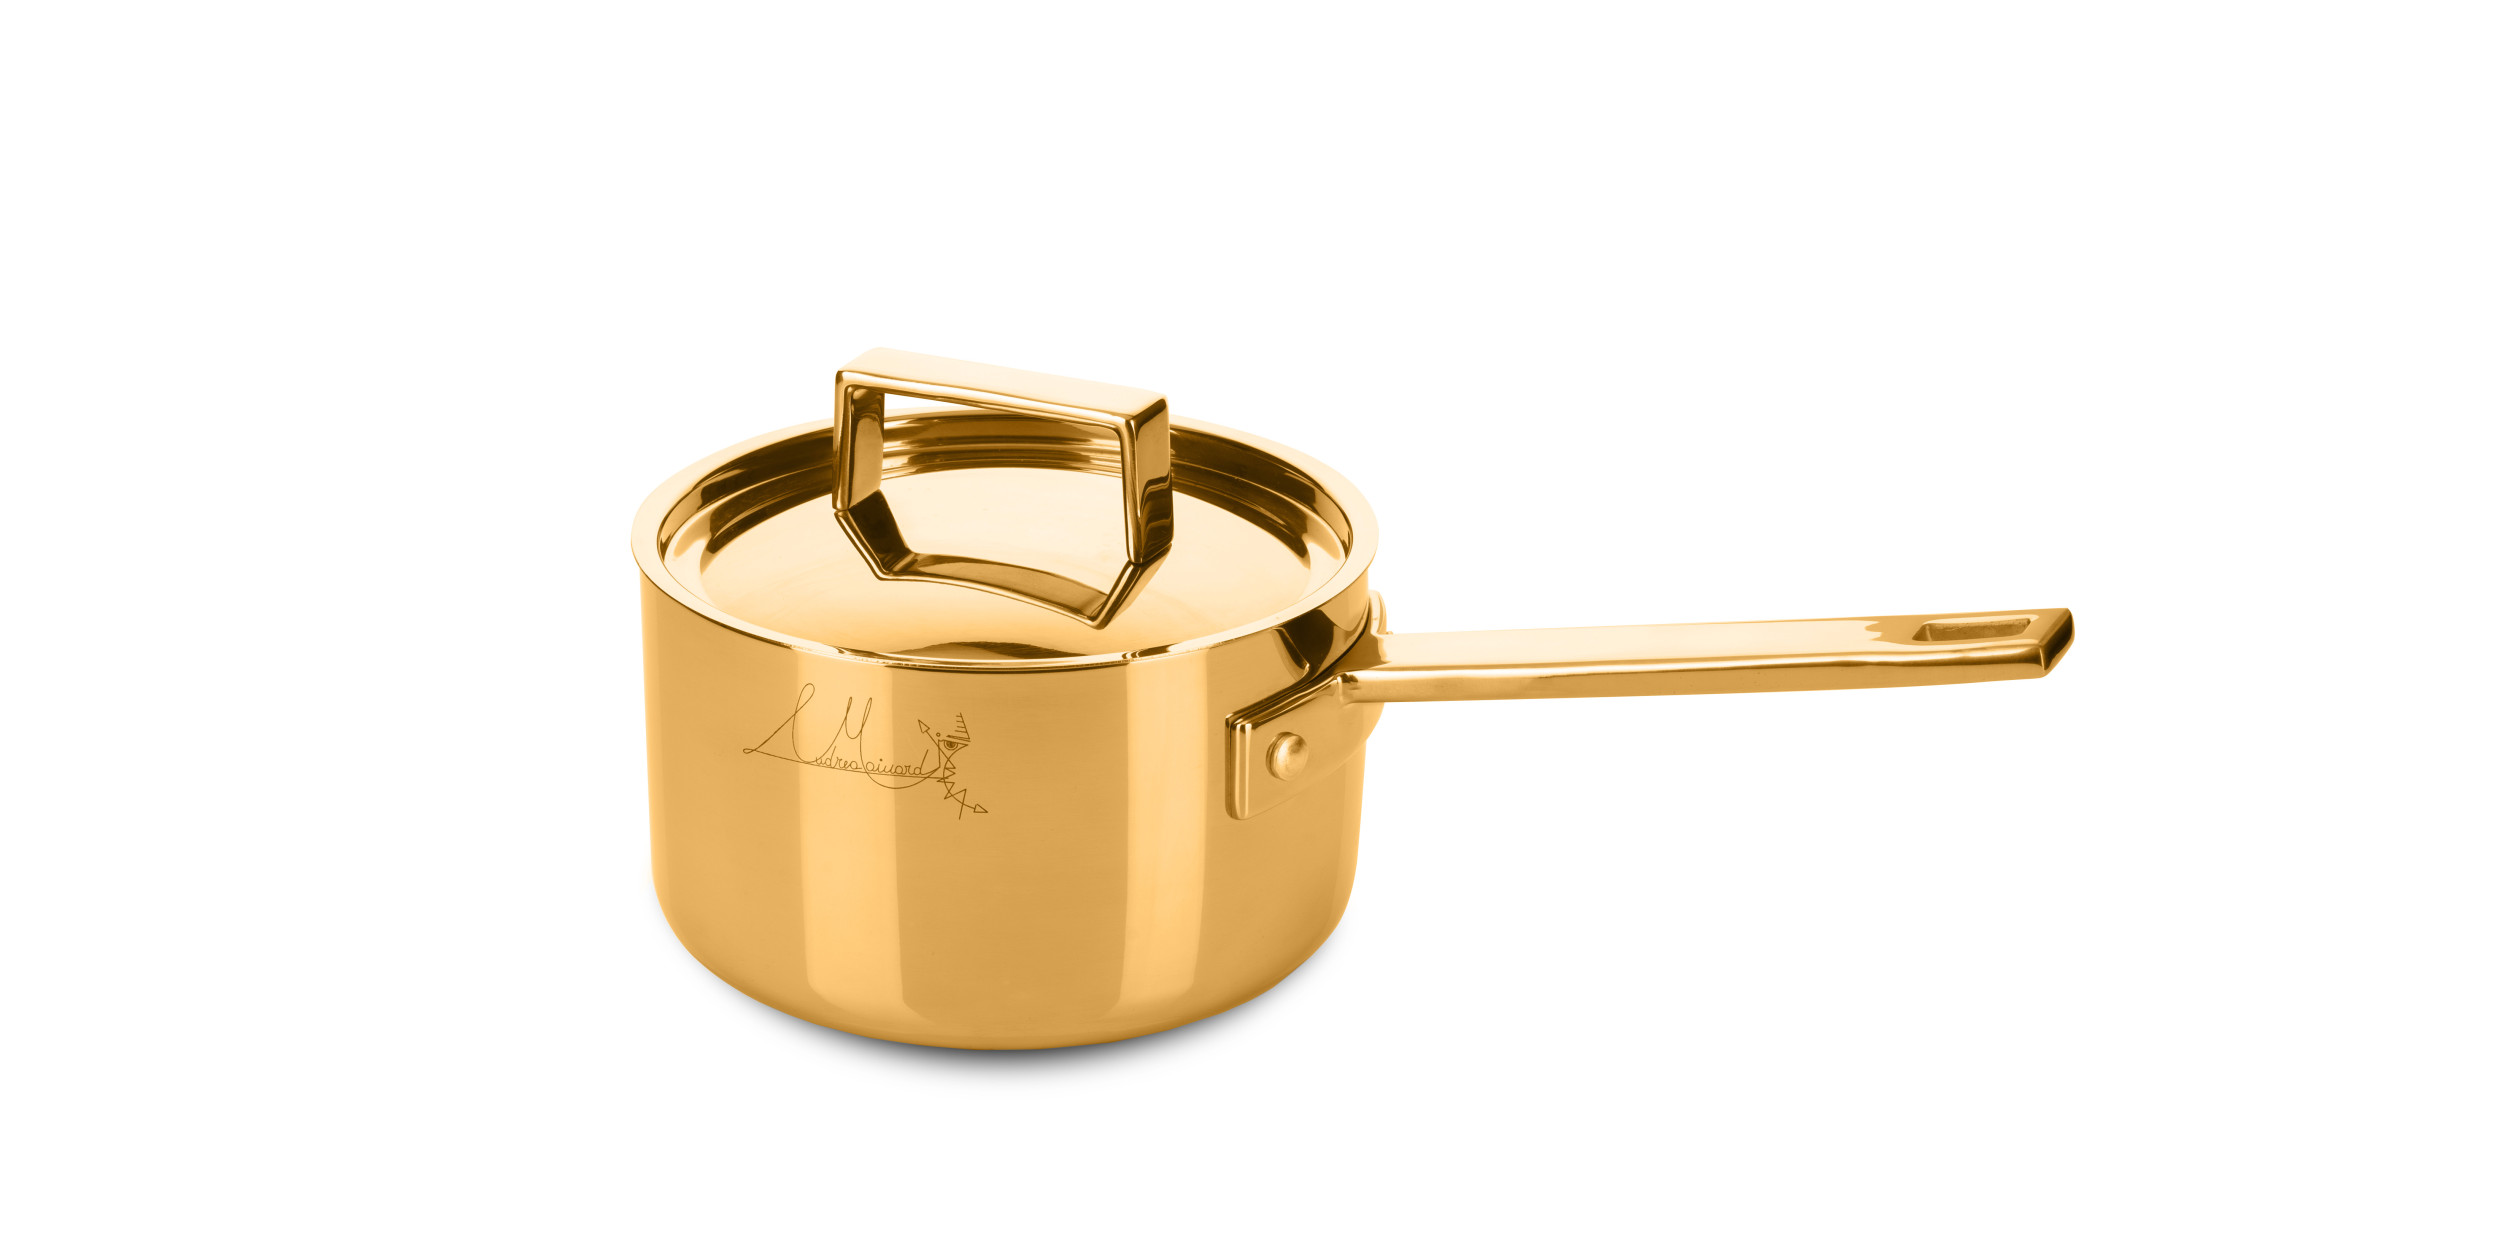 Frying pan 2 handles 'Attiva' gold - Attiva Gold - Cookware